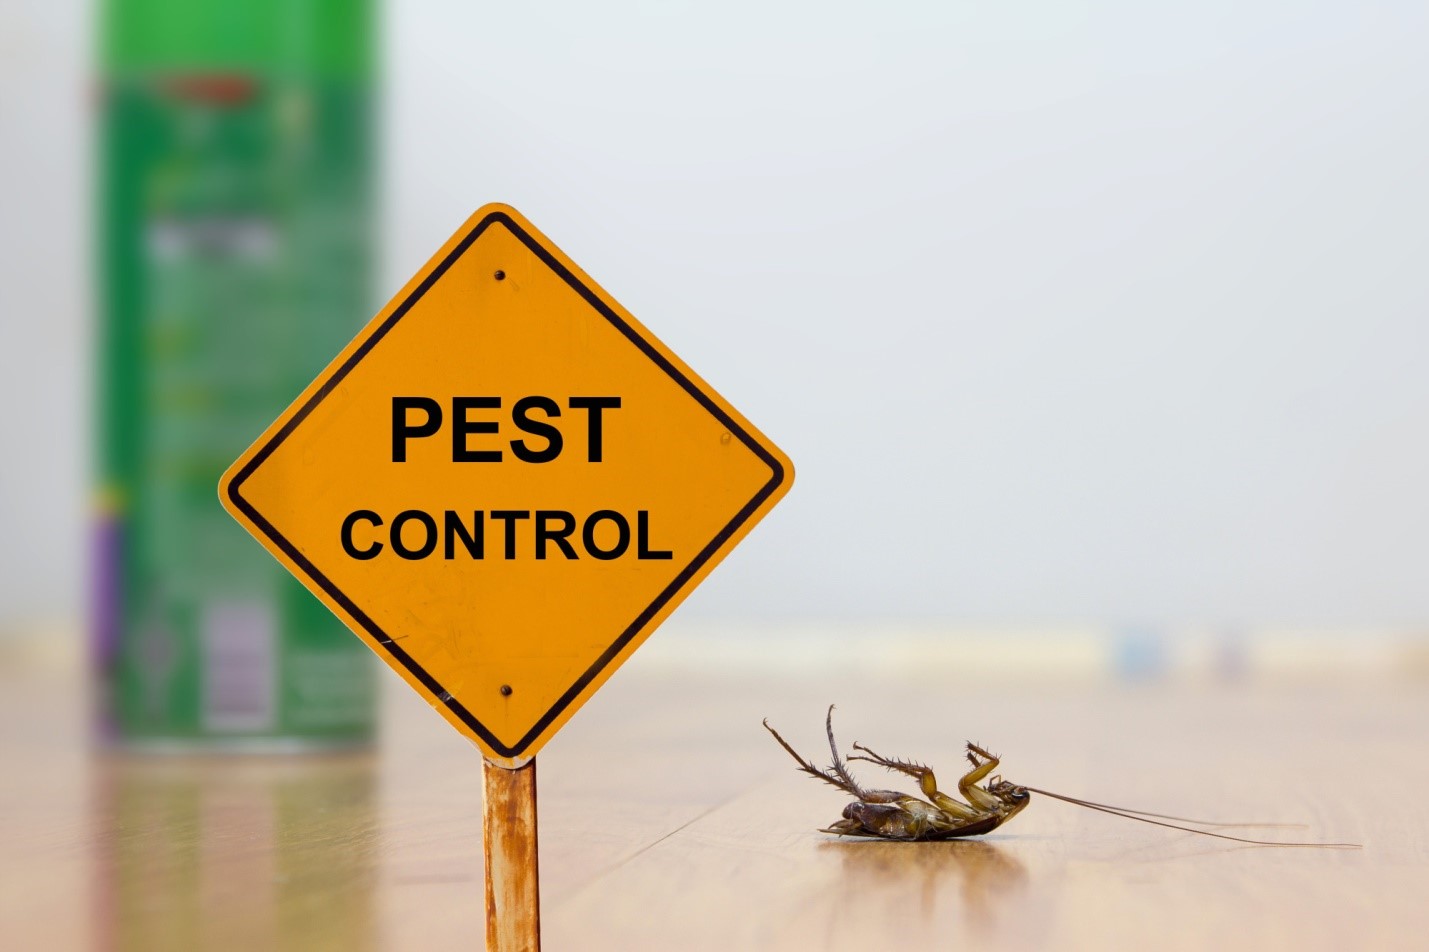 24 HR Pest Control